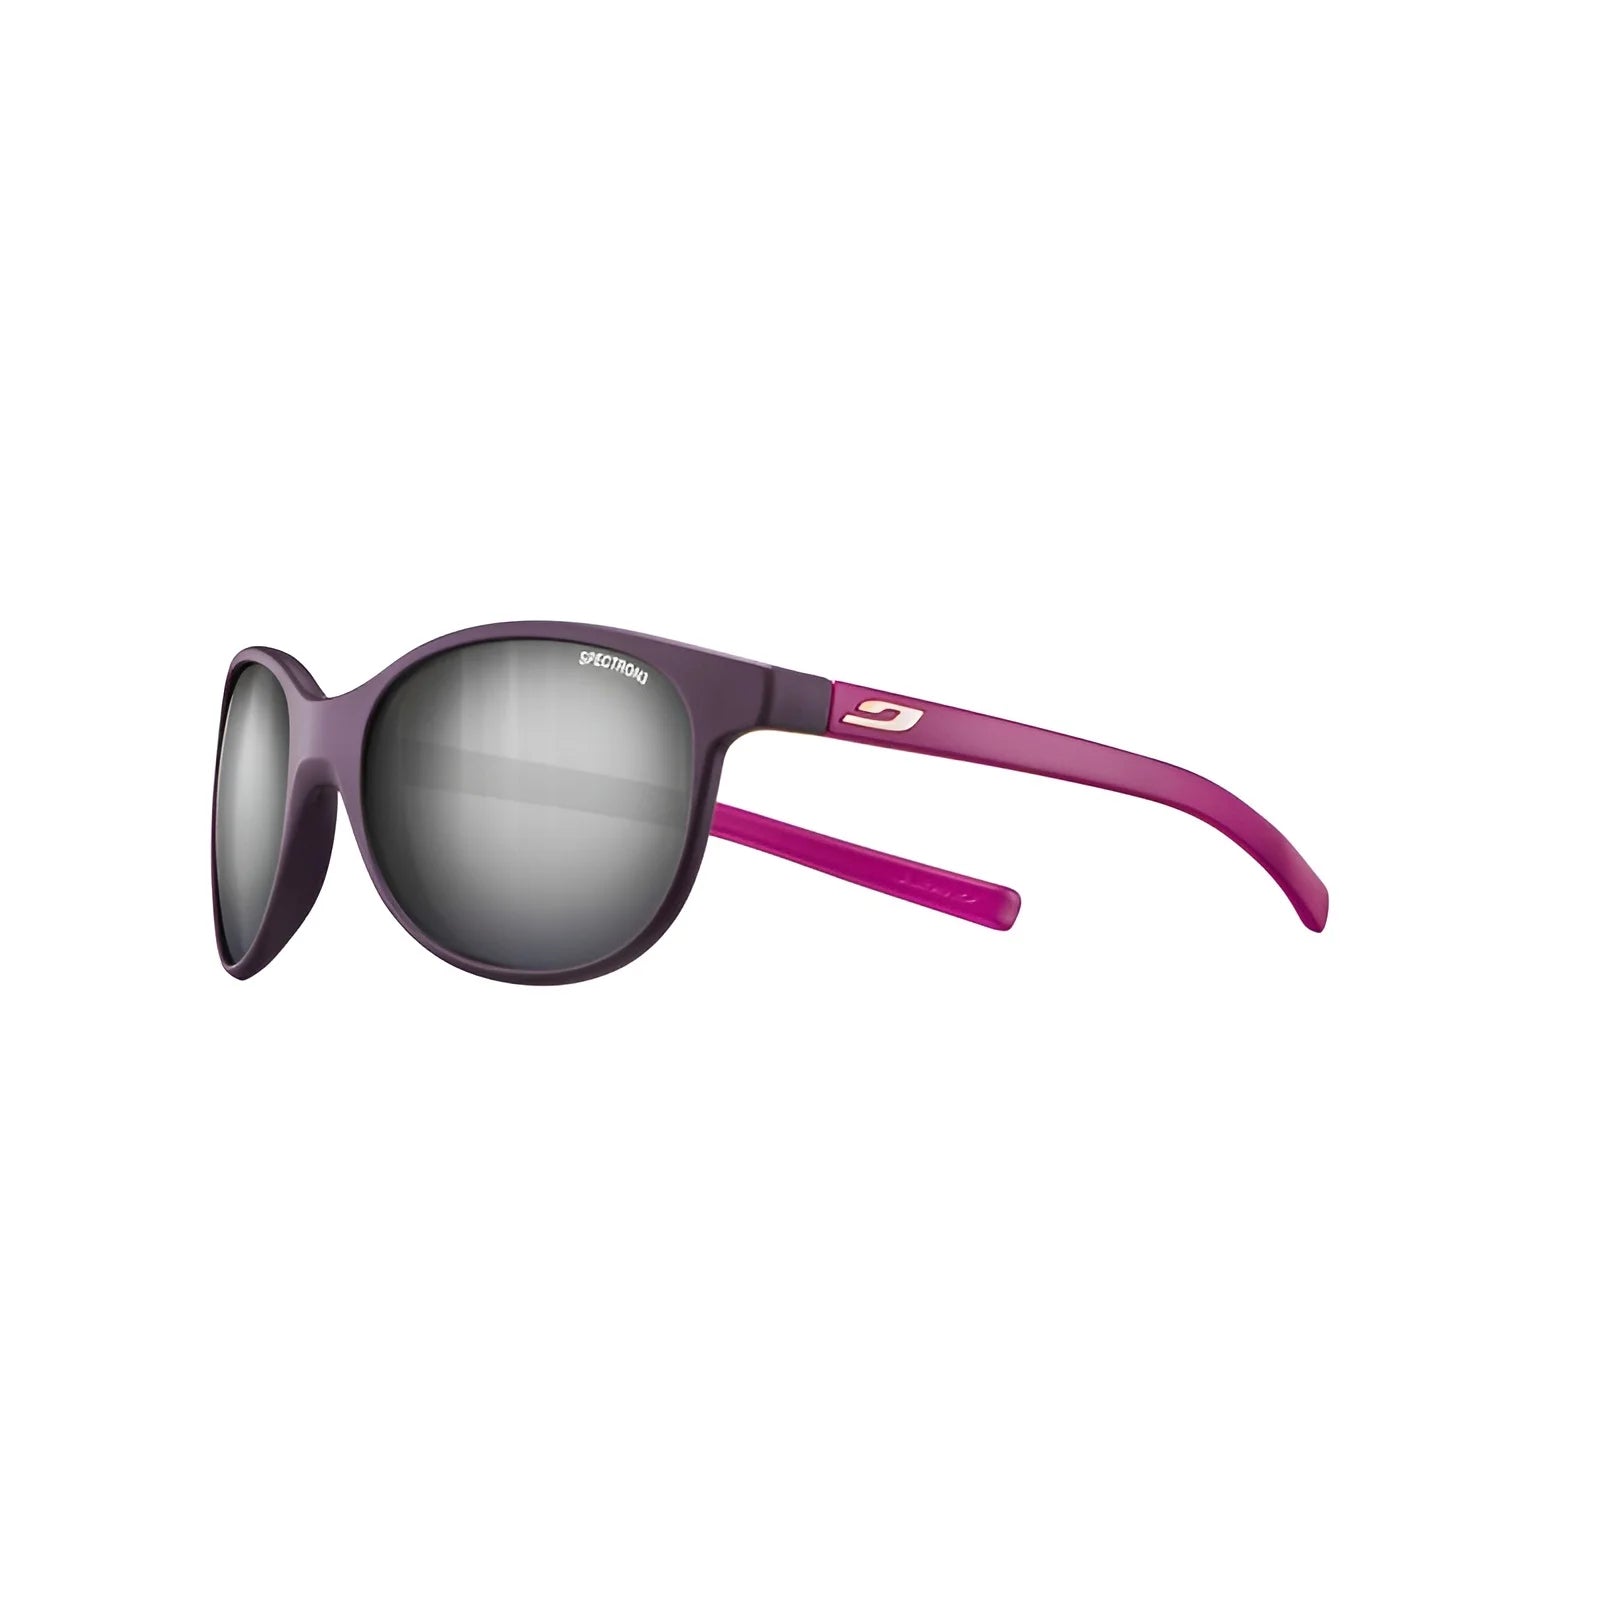 Julbo Lizzy Sunglasses Aubergine Matte / Plum Matte / Spectron 3 (VLT 13%)